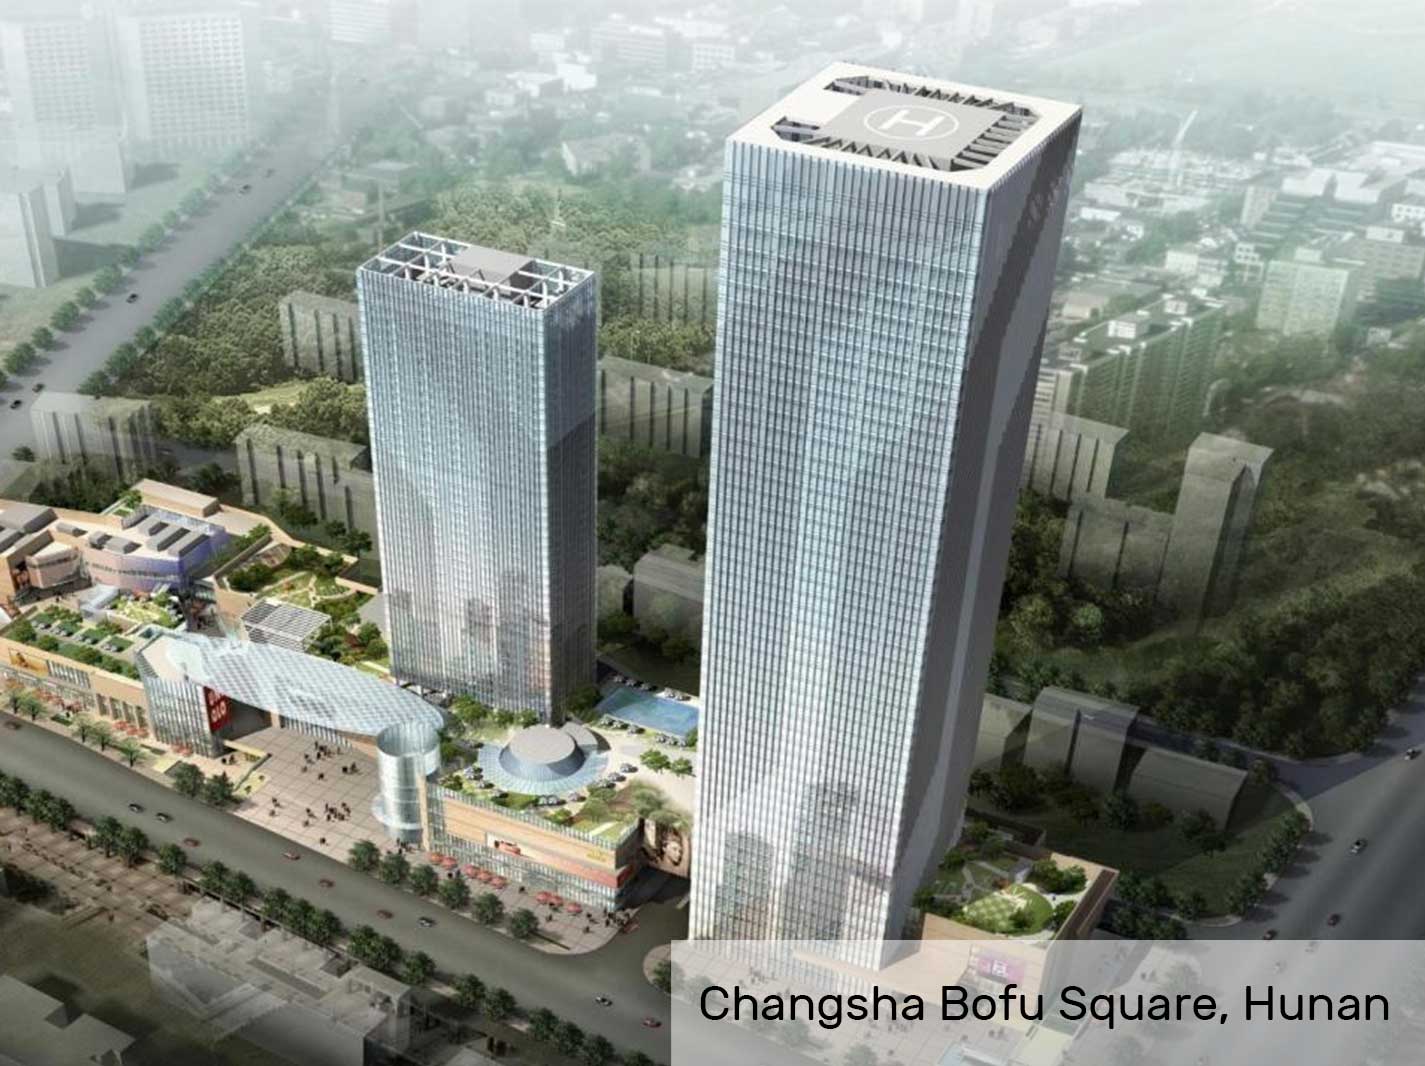 Place Changsha Bofu, Hunan